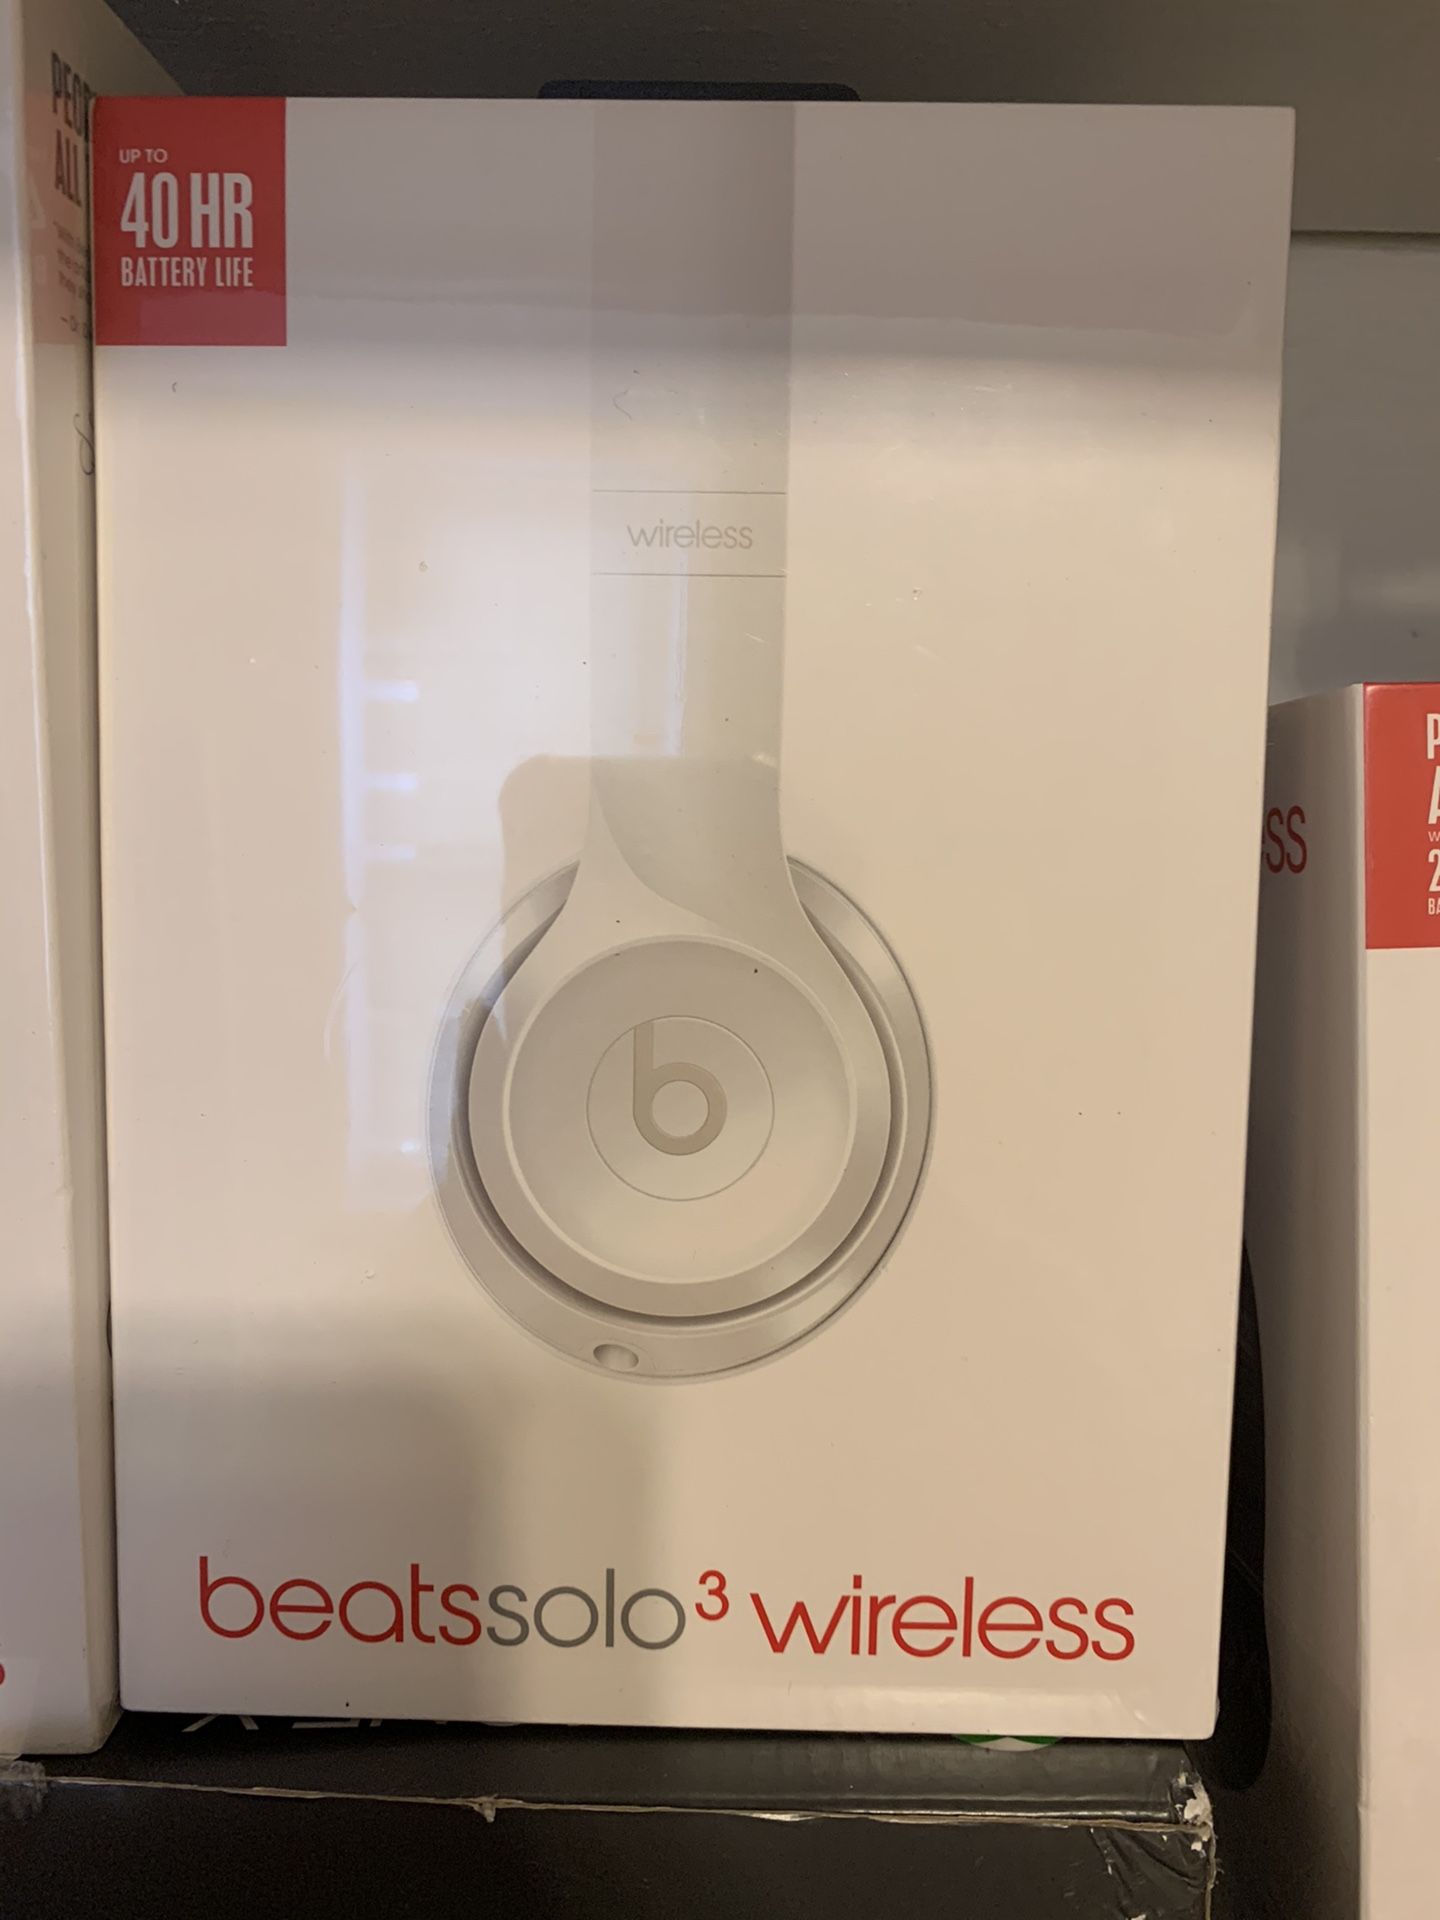 Beats solo 3 wireless new